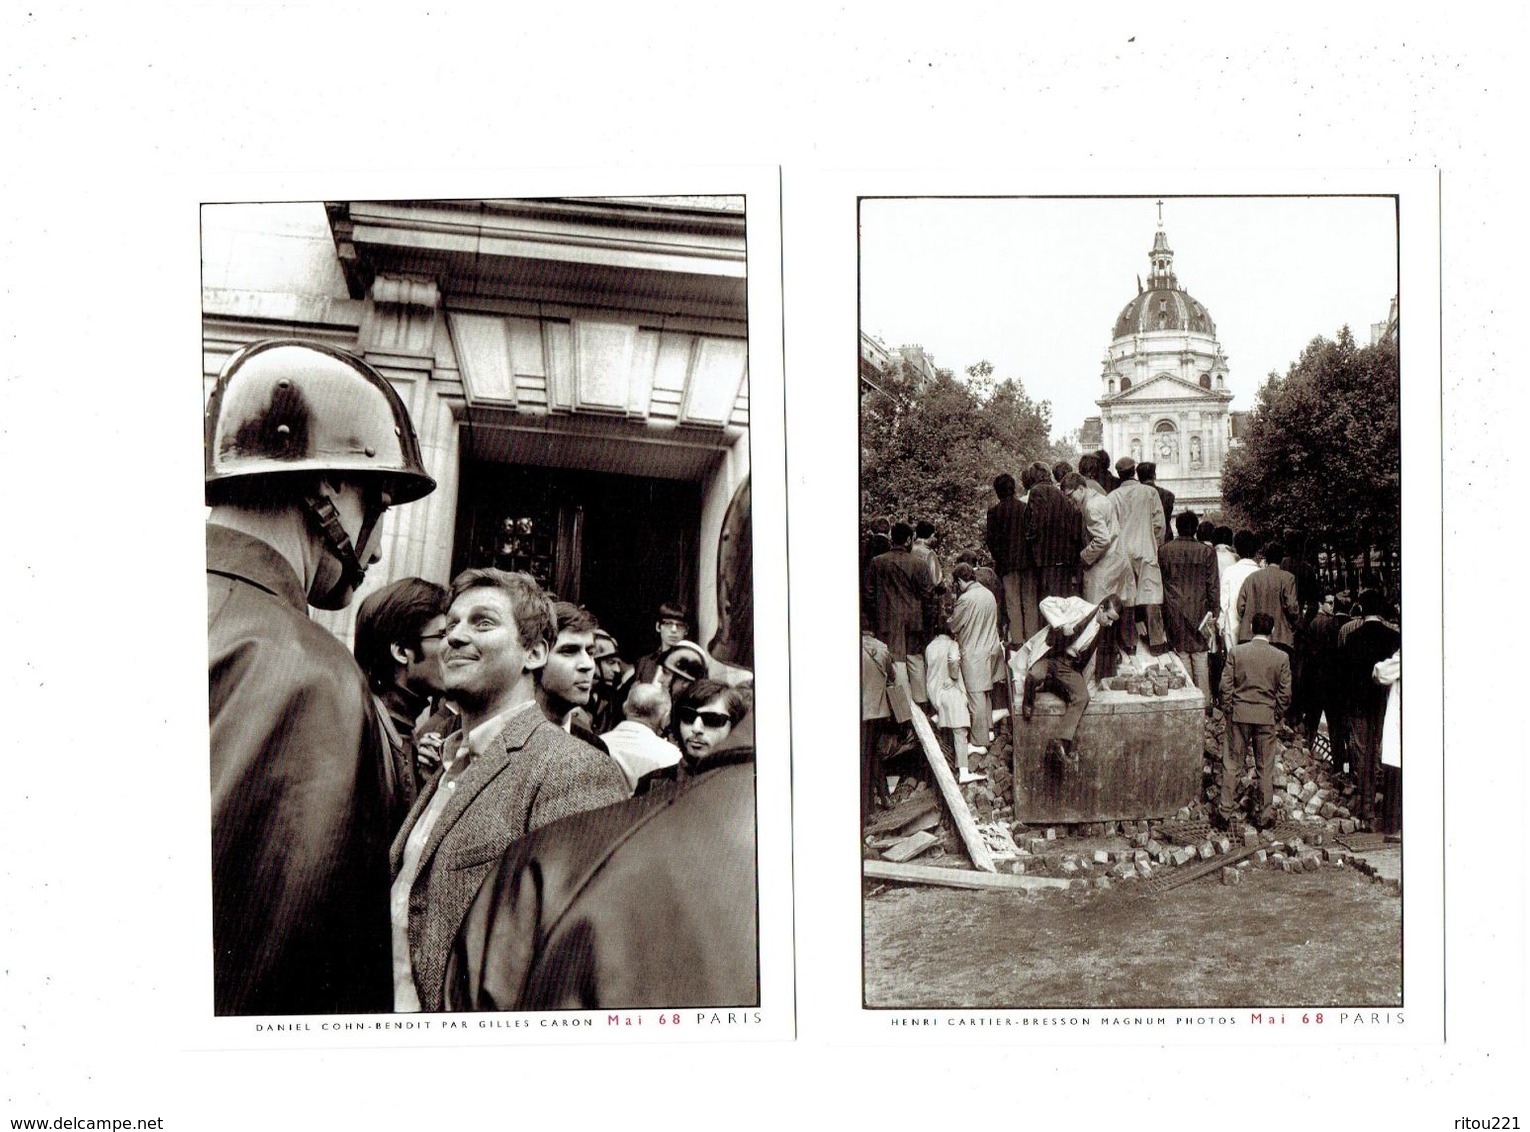 Grande Cpm Lot 4 - Daniel Cohn-Bendit - Henri Cartier Bresson Bruno Barbet Mai 1968 PARIS - Politique Affiches CAILLOU - Manifestazioni